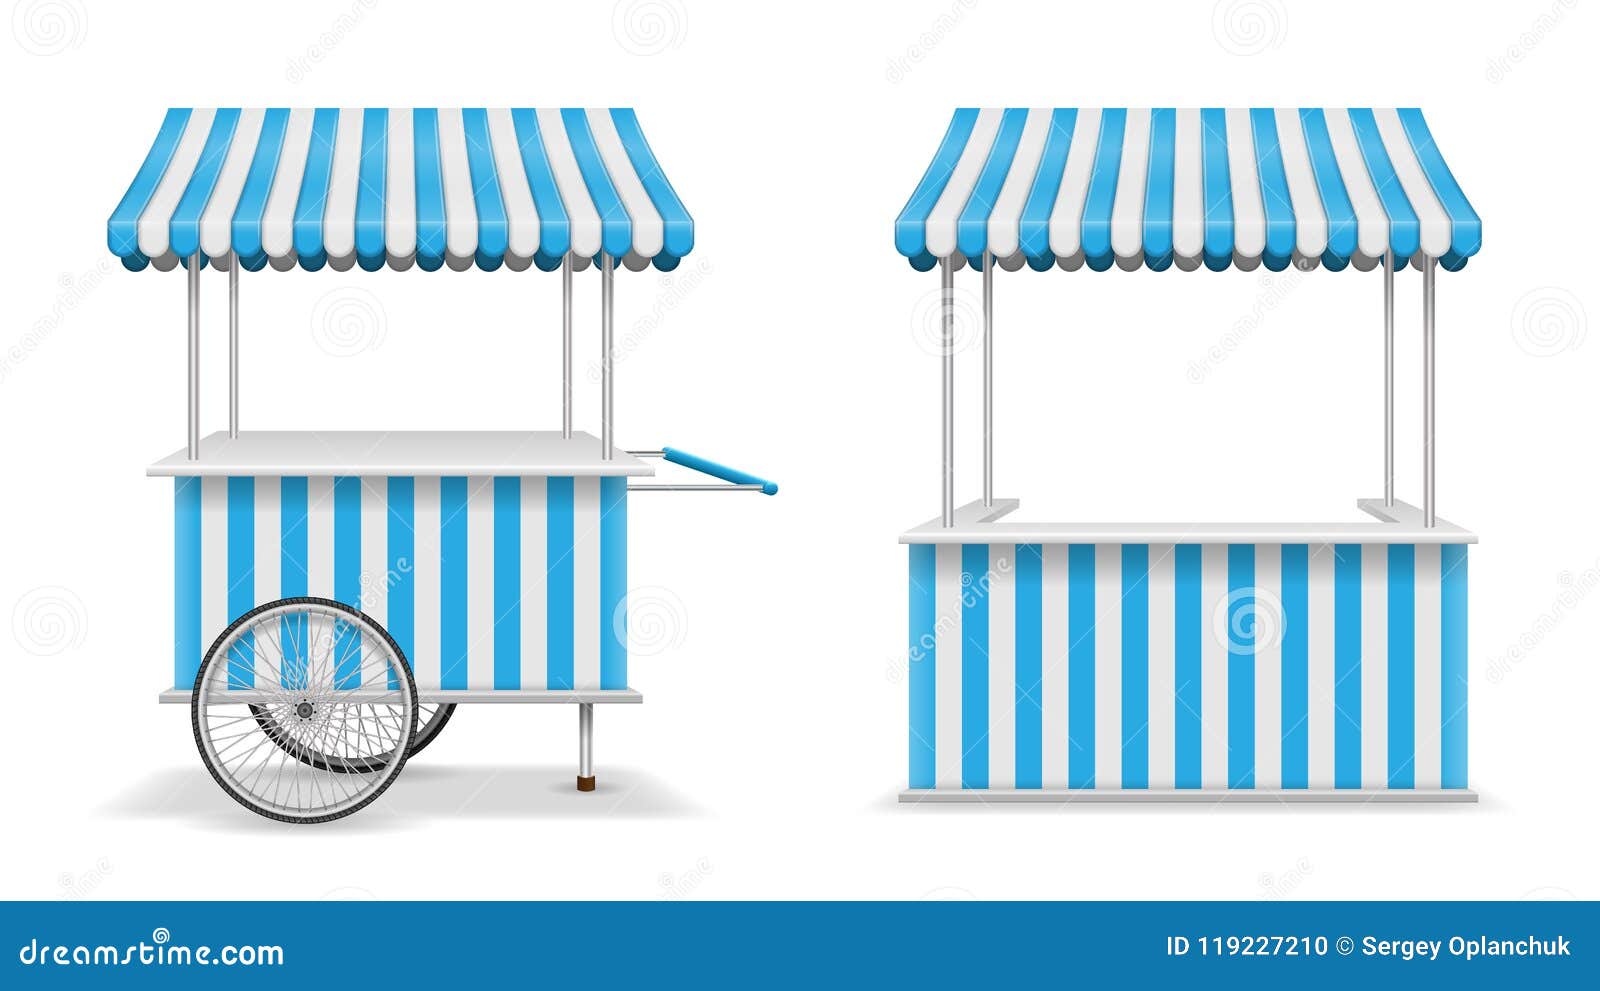 Download Realistic Set Of Street Food Kiosk And Cart With Wheels Mobile Blue Market Stall Template Farmer Kiosk Shop Mockup Stock Vector Illustration Of Element Market 119227210